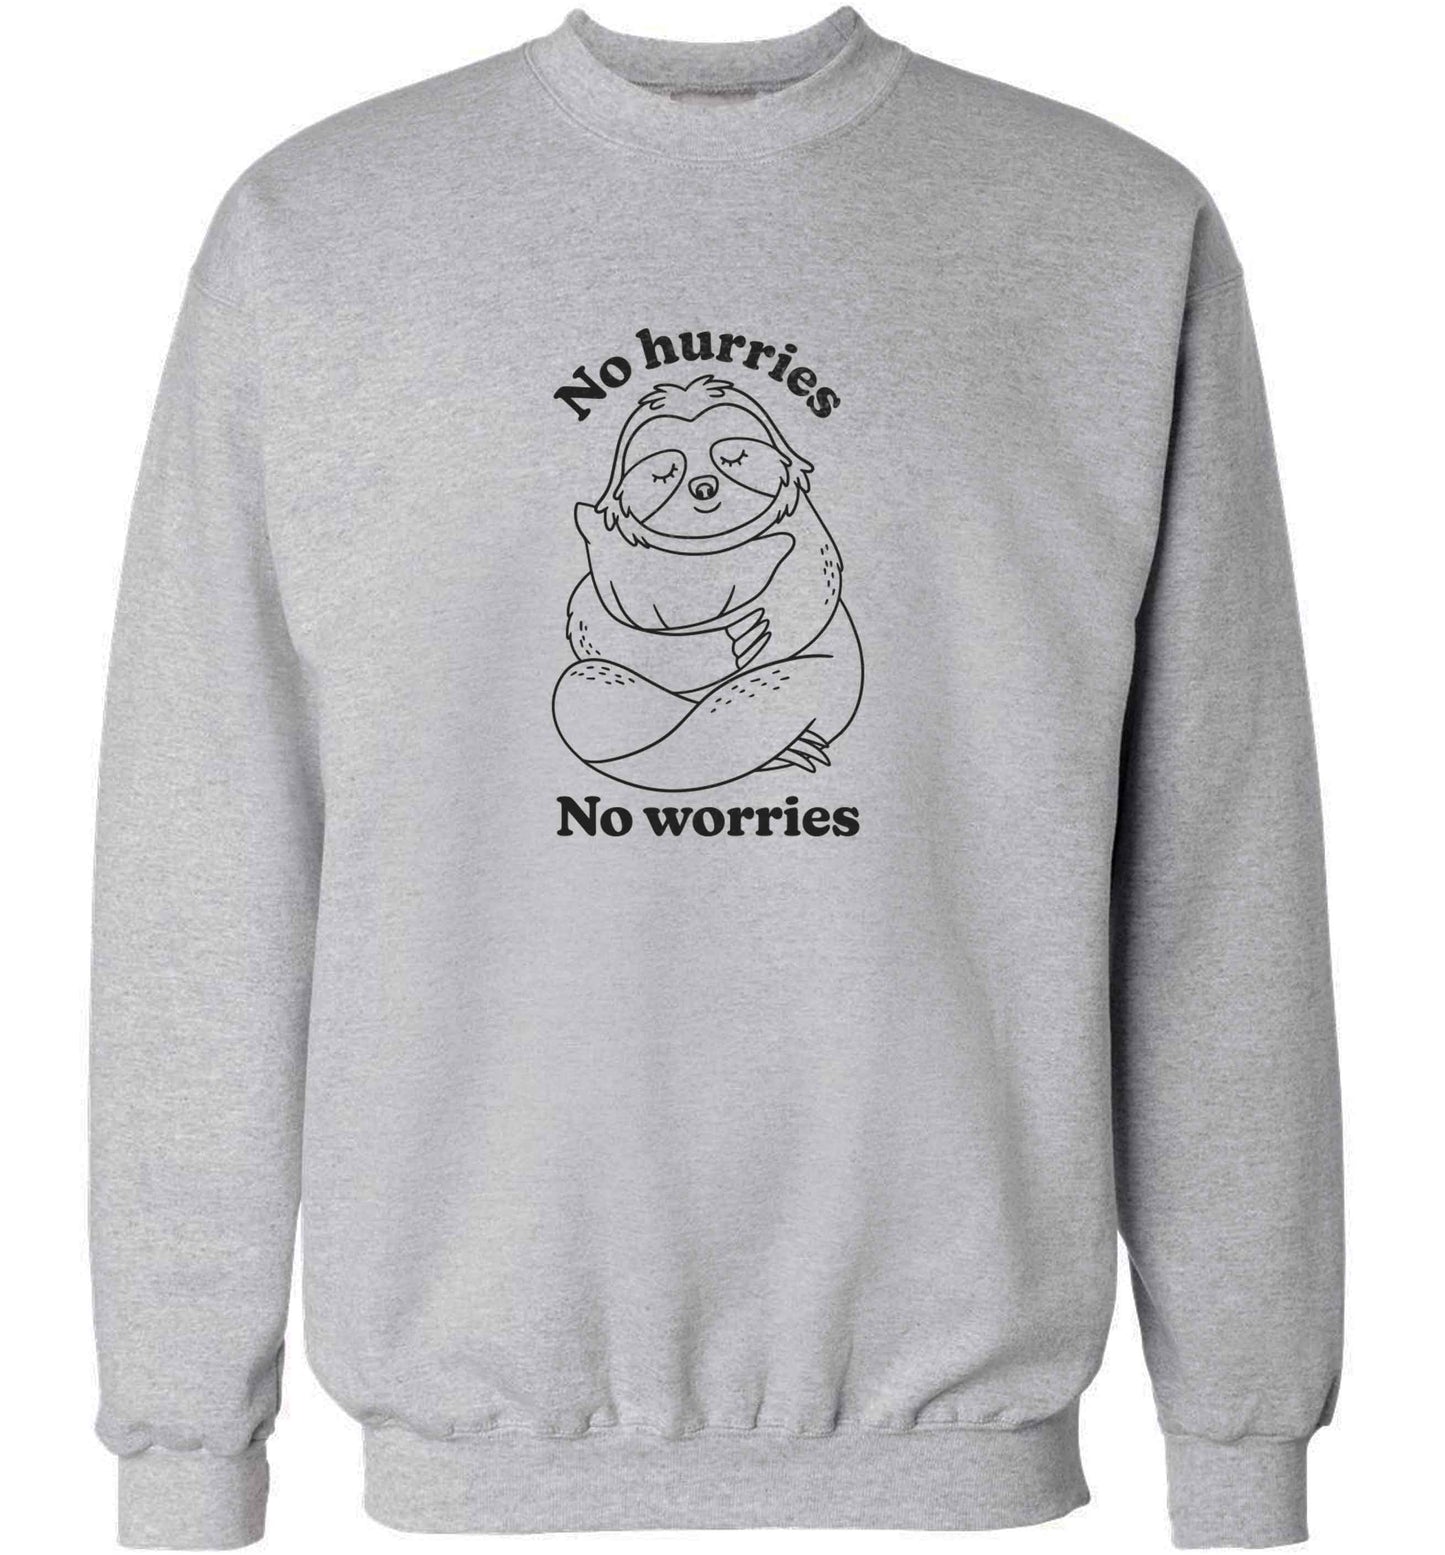 No hurries no worries adult's unisex grey sweater 2XL